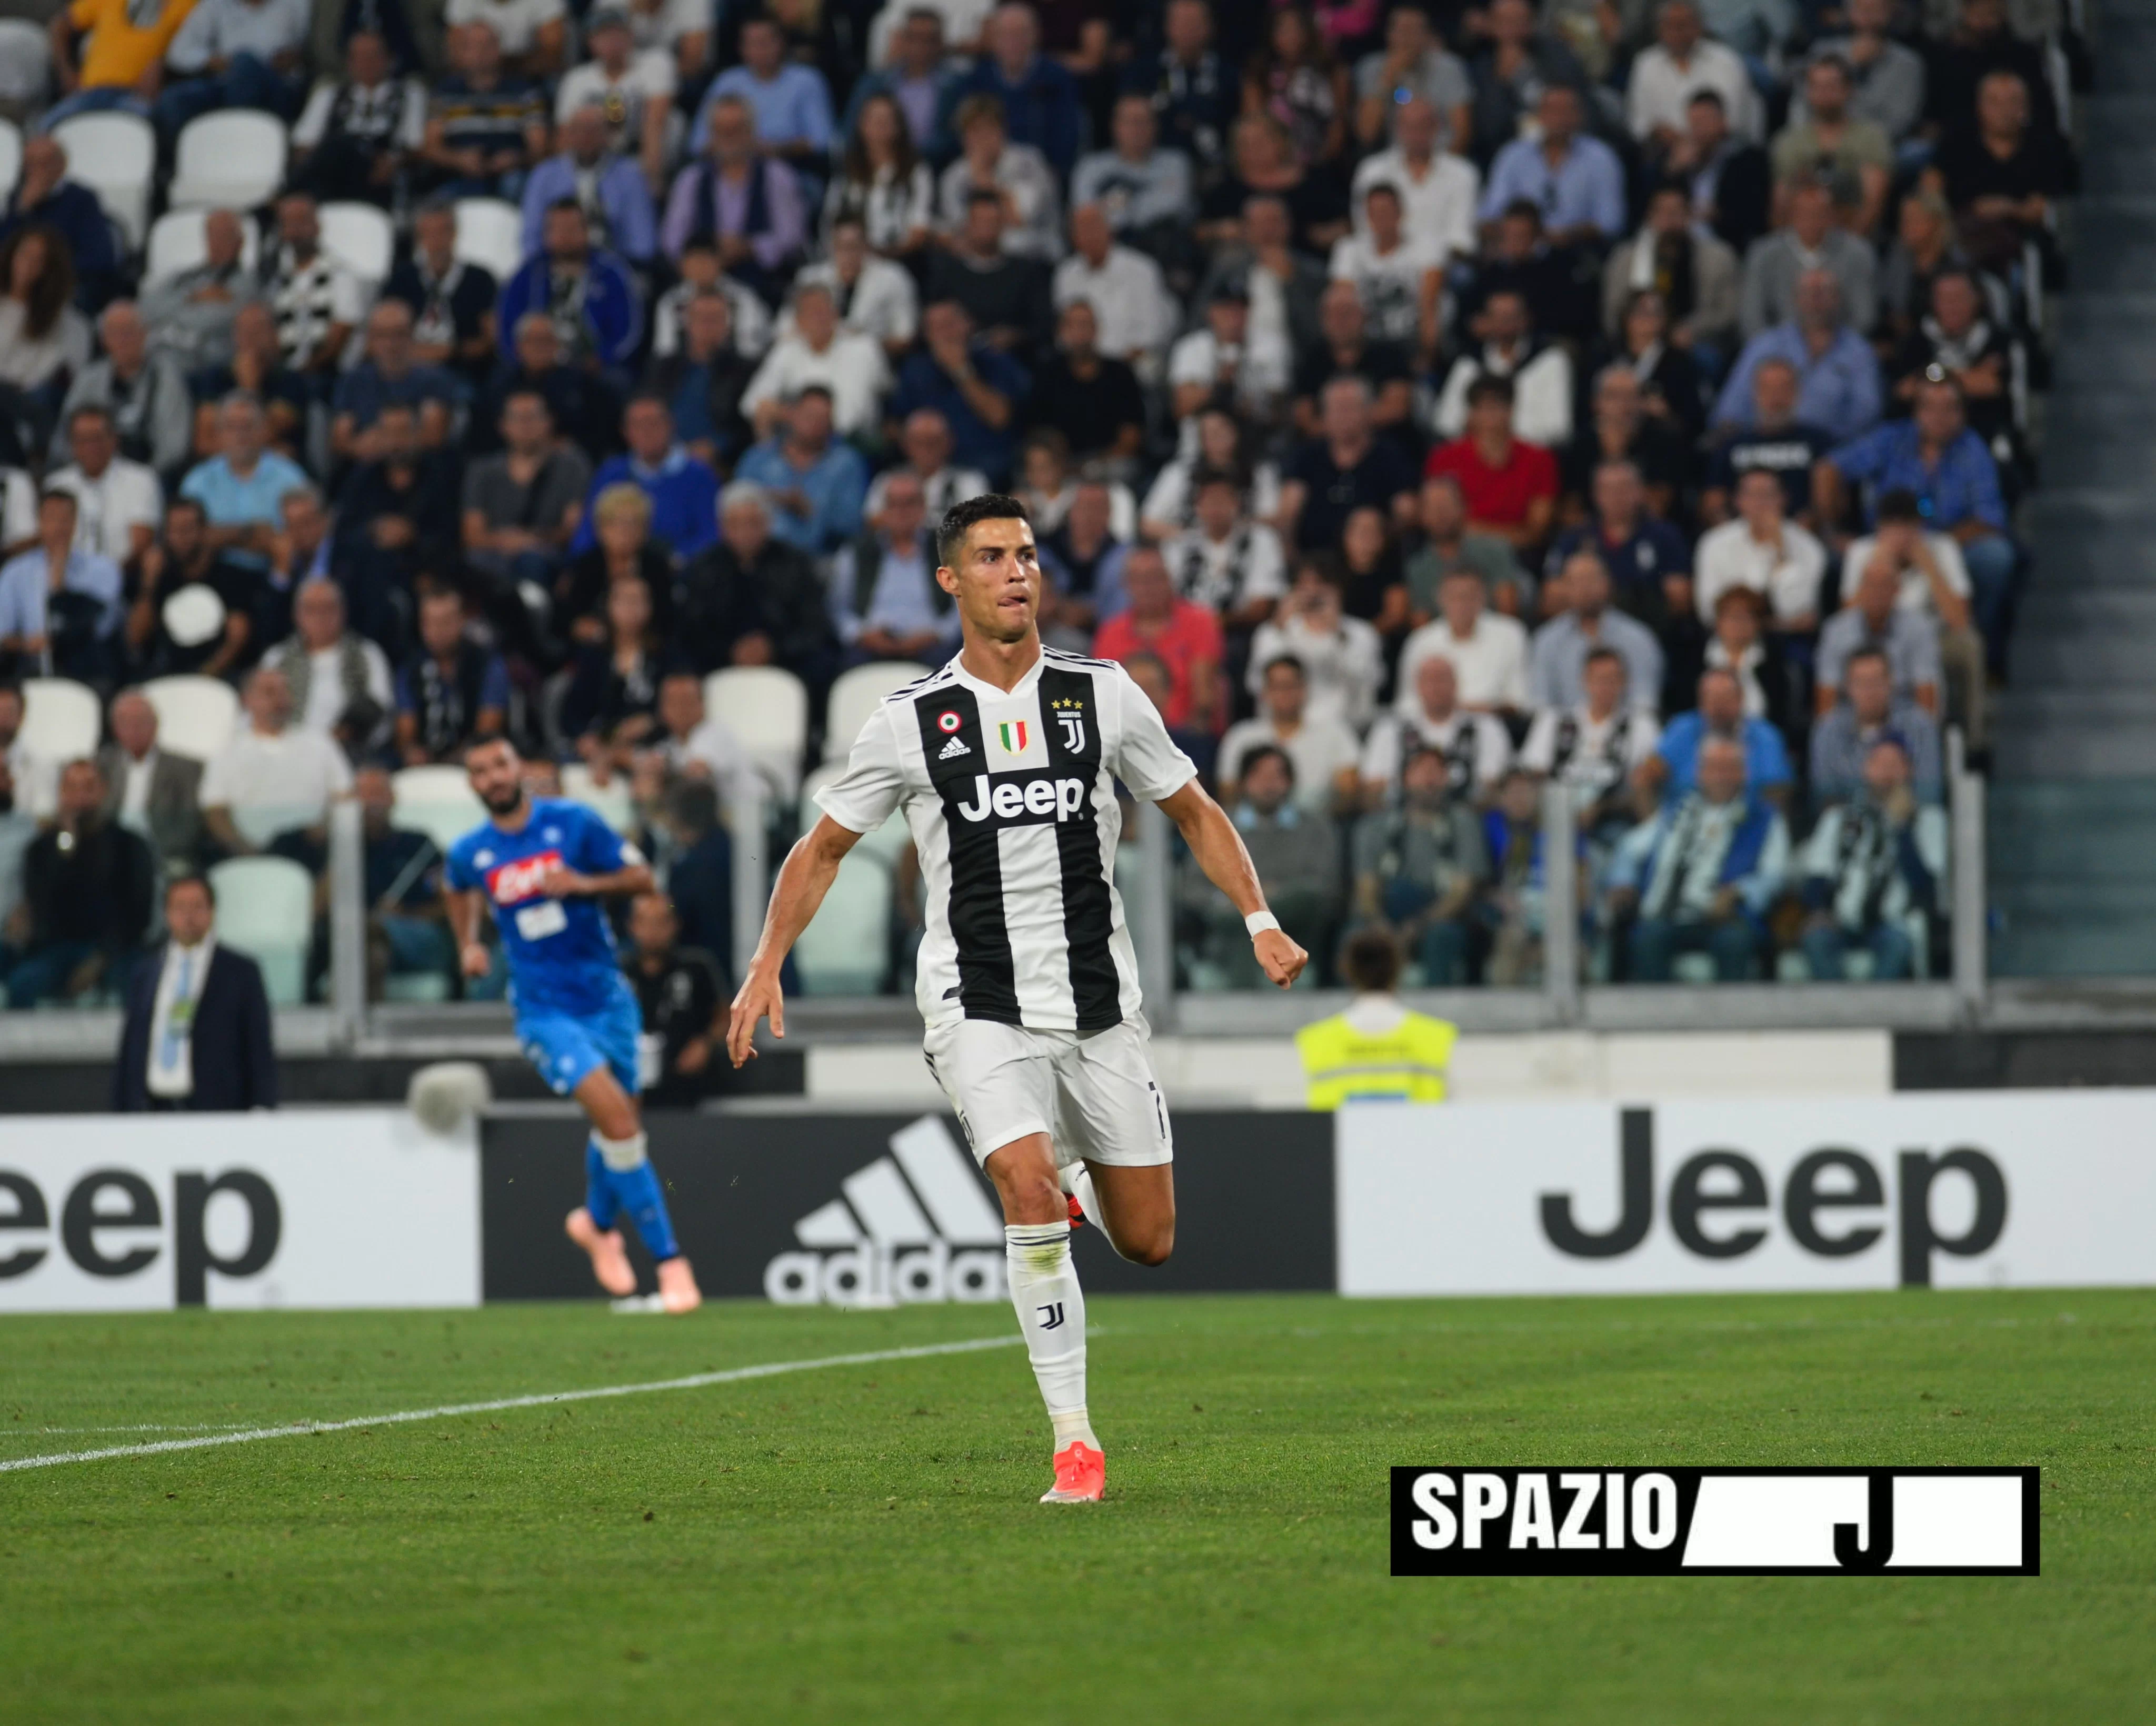 Juventus-Genoa 1-1, le pagelle. Ronaldo non basta, Bonucci-Benatia colpevoli